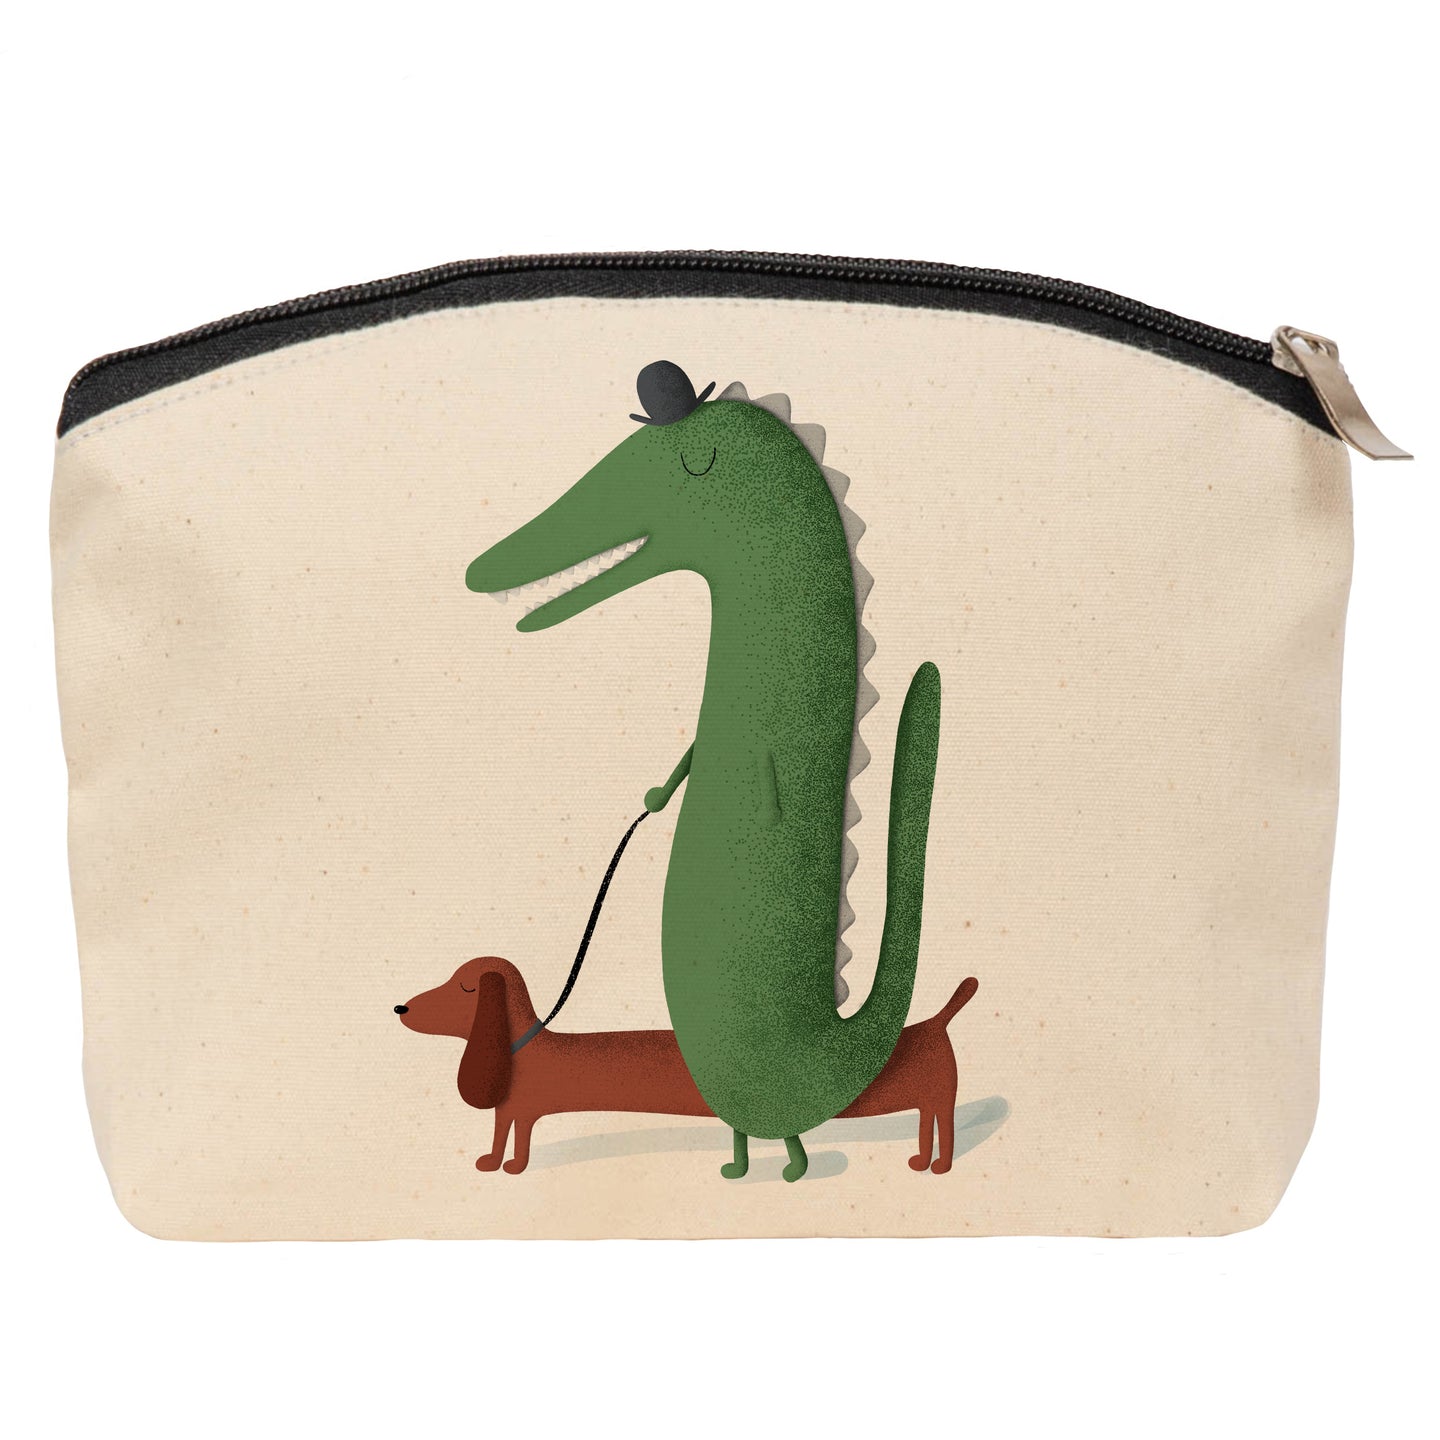 Crocodile and dog cosmetic bag